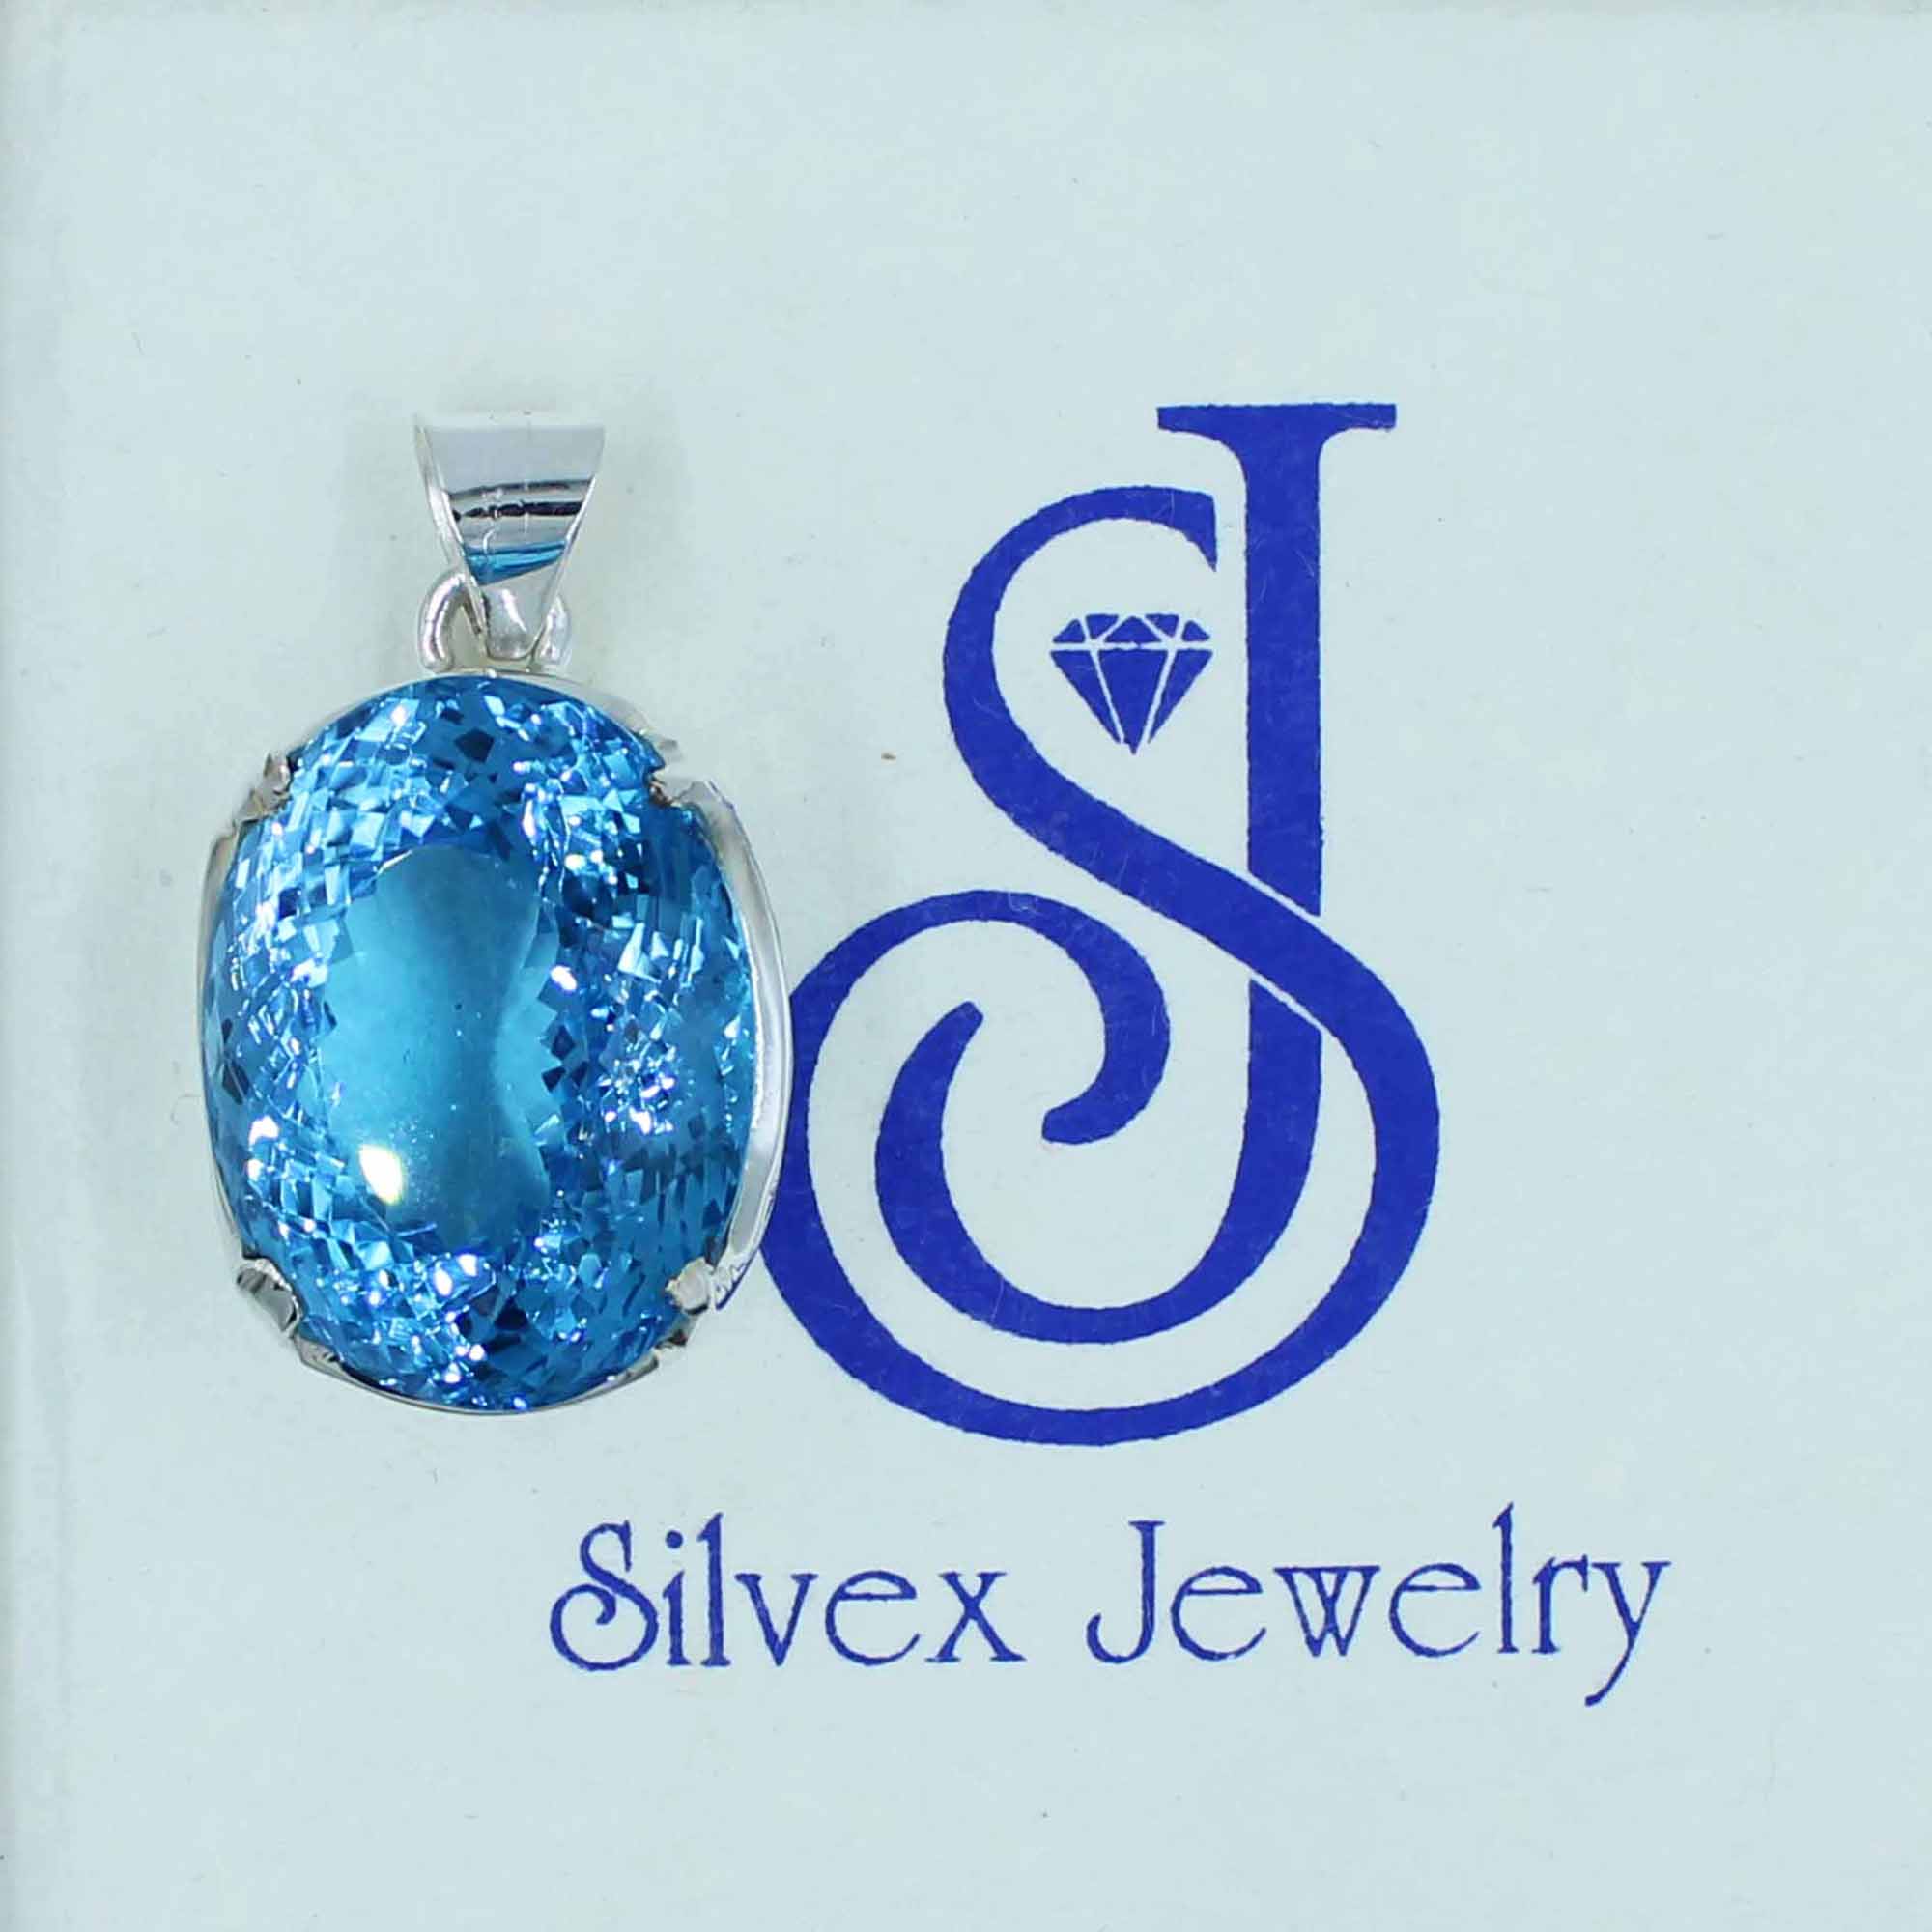 Swiss Blue Topaz Pendant - December Birthstone Silver Jewelry